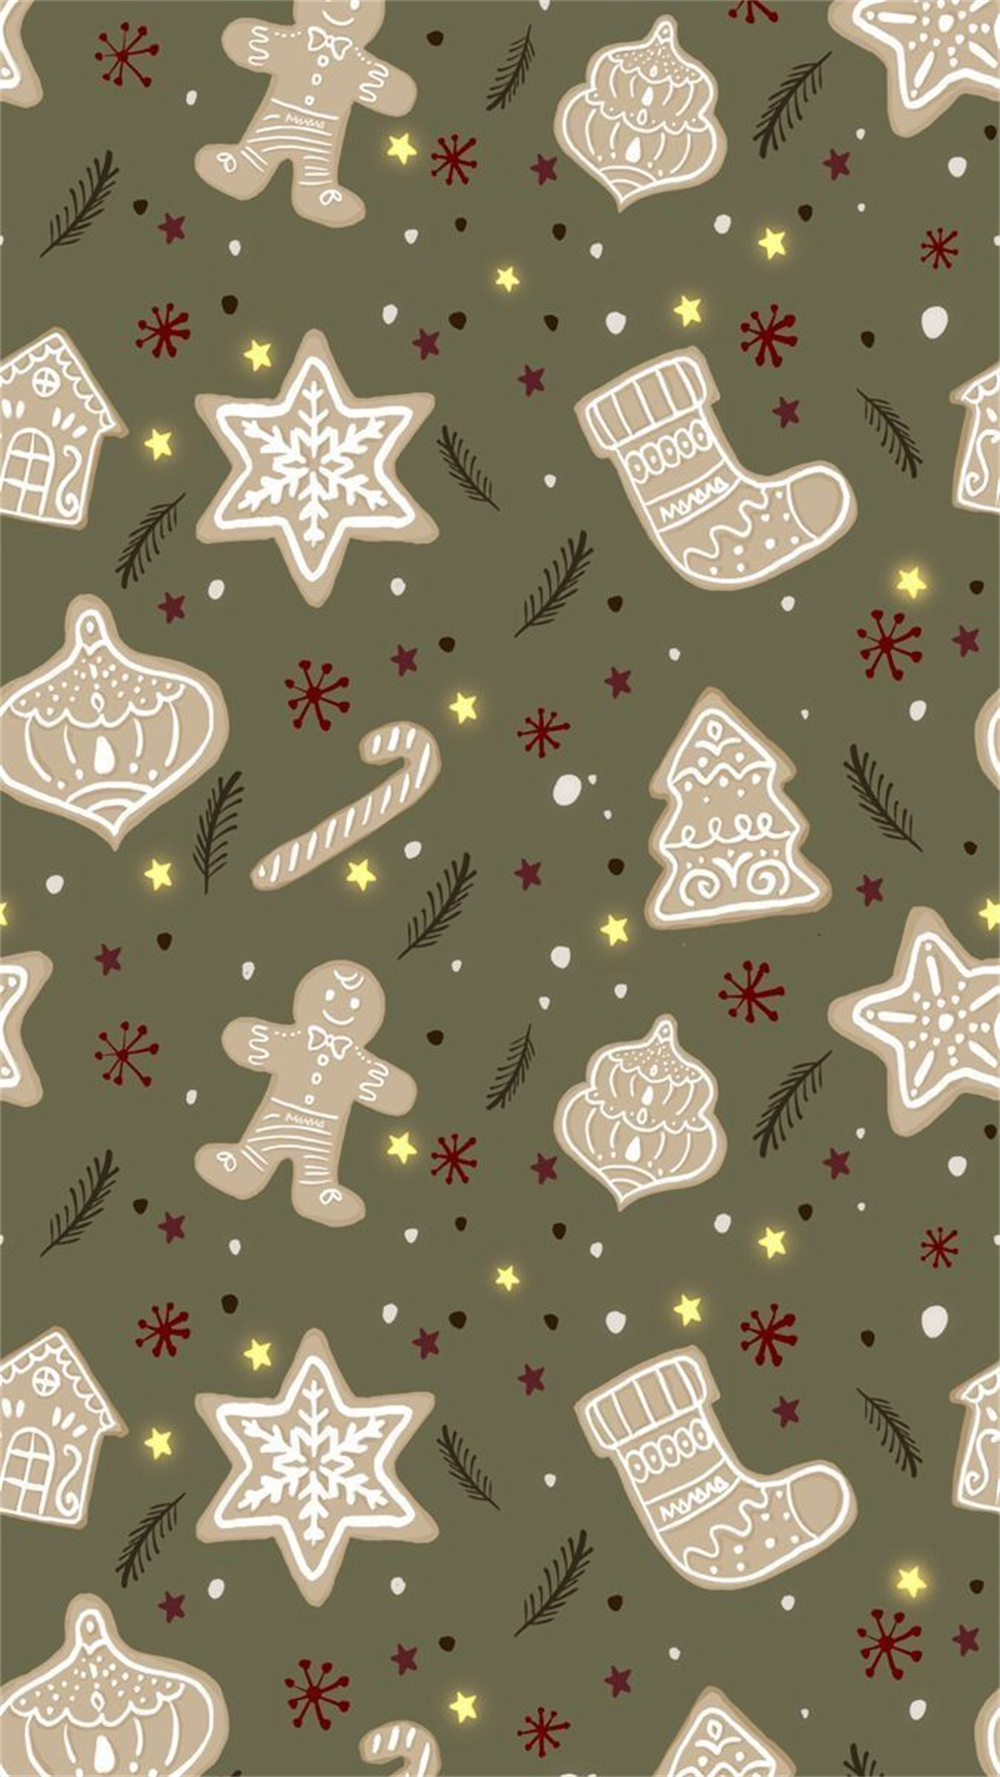 Aesthetic Christmas iPhone Wallpaper Ideas